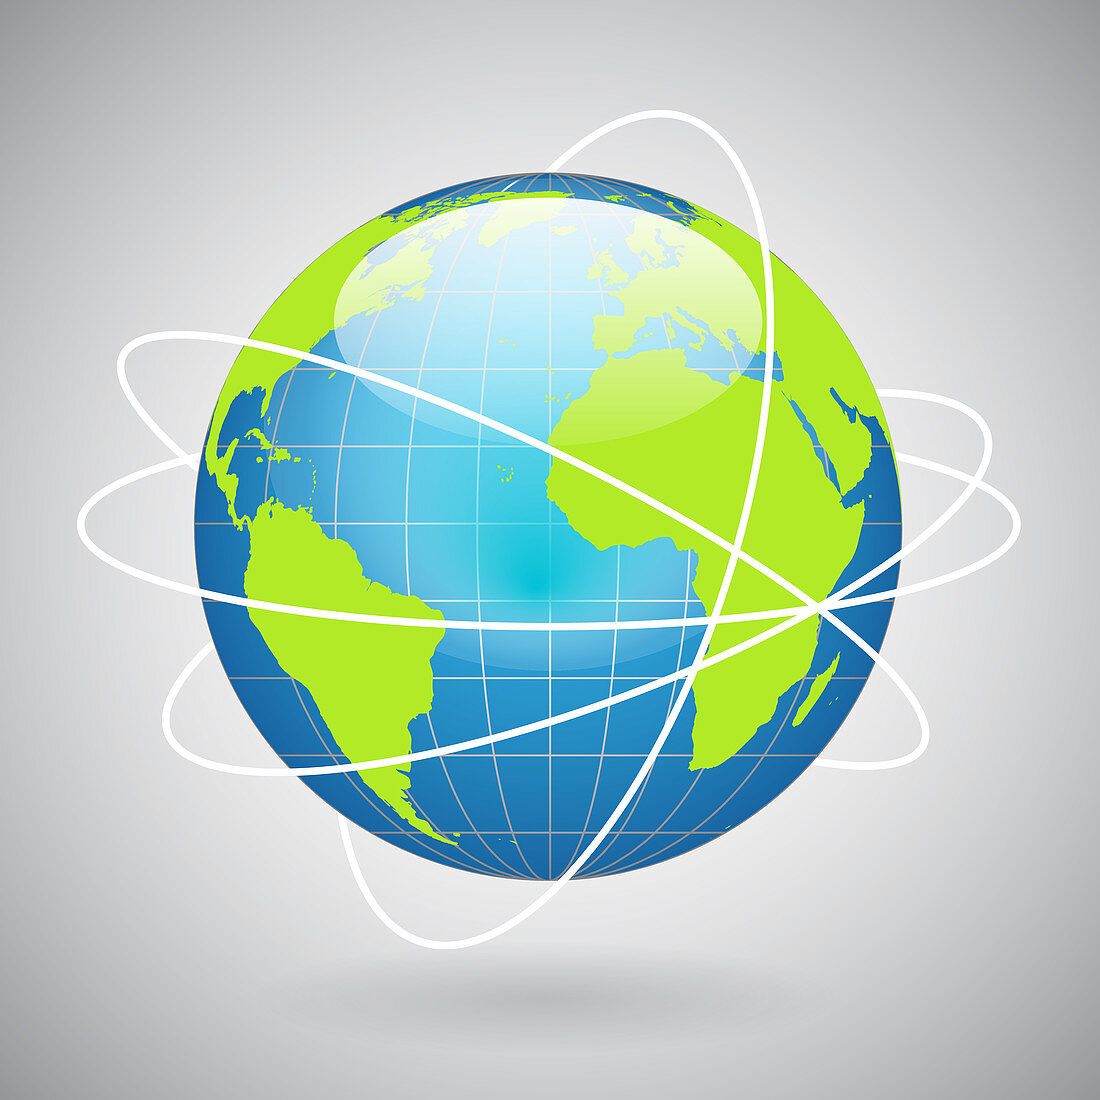 Global network, illustration